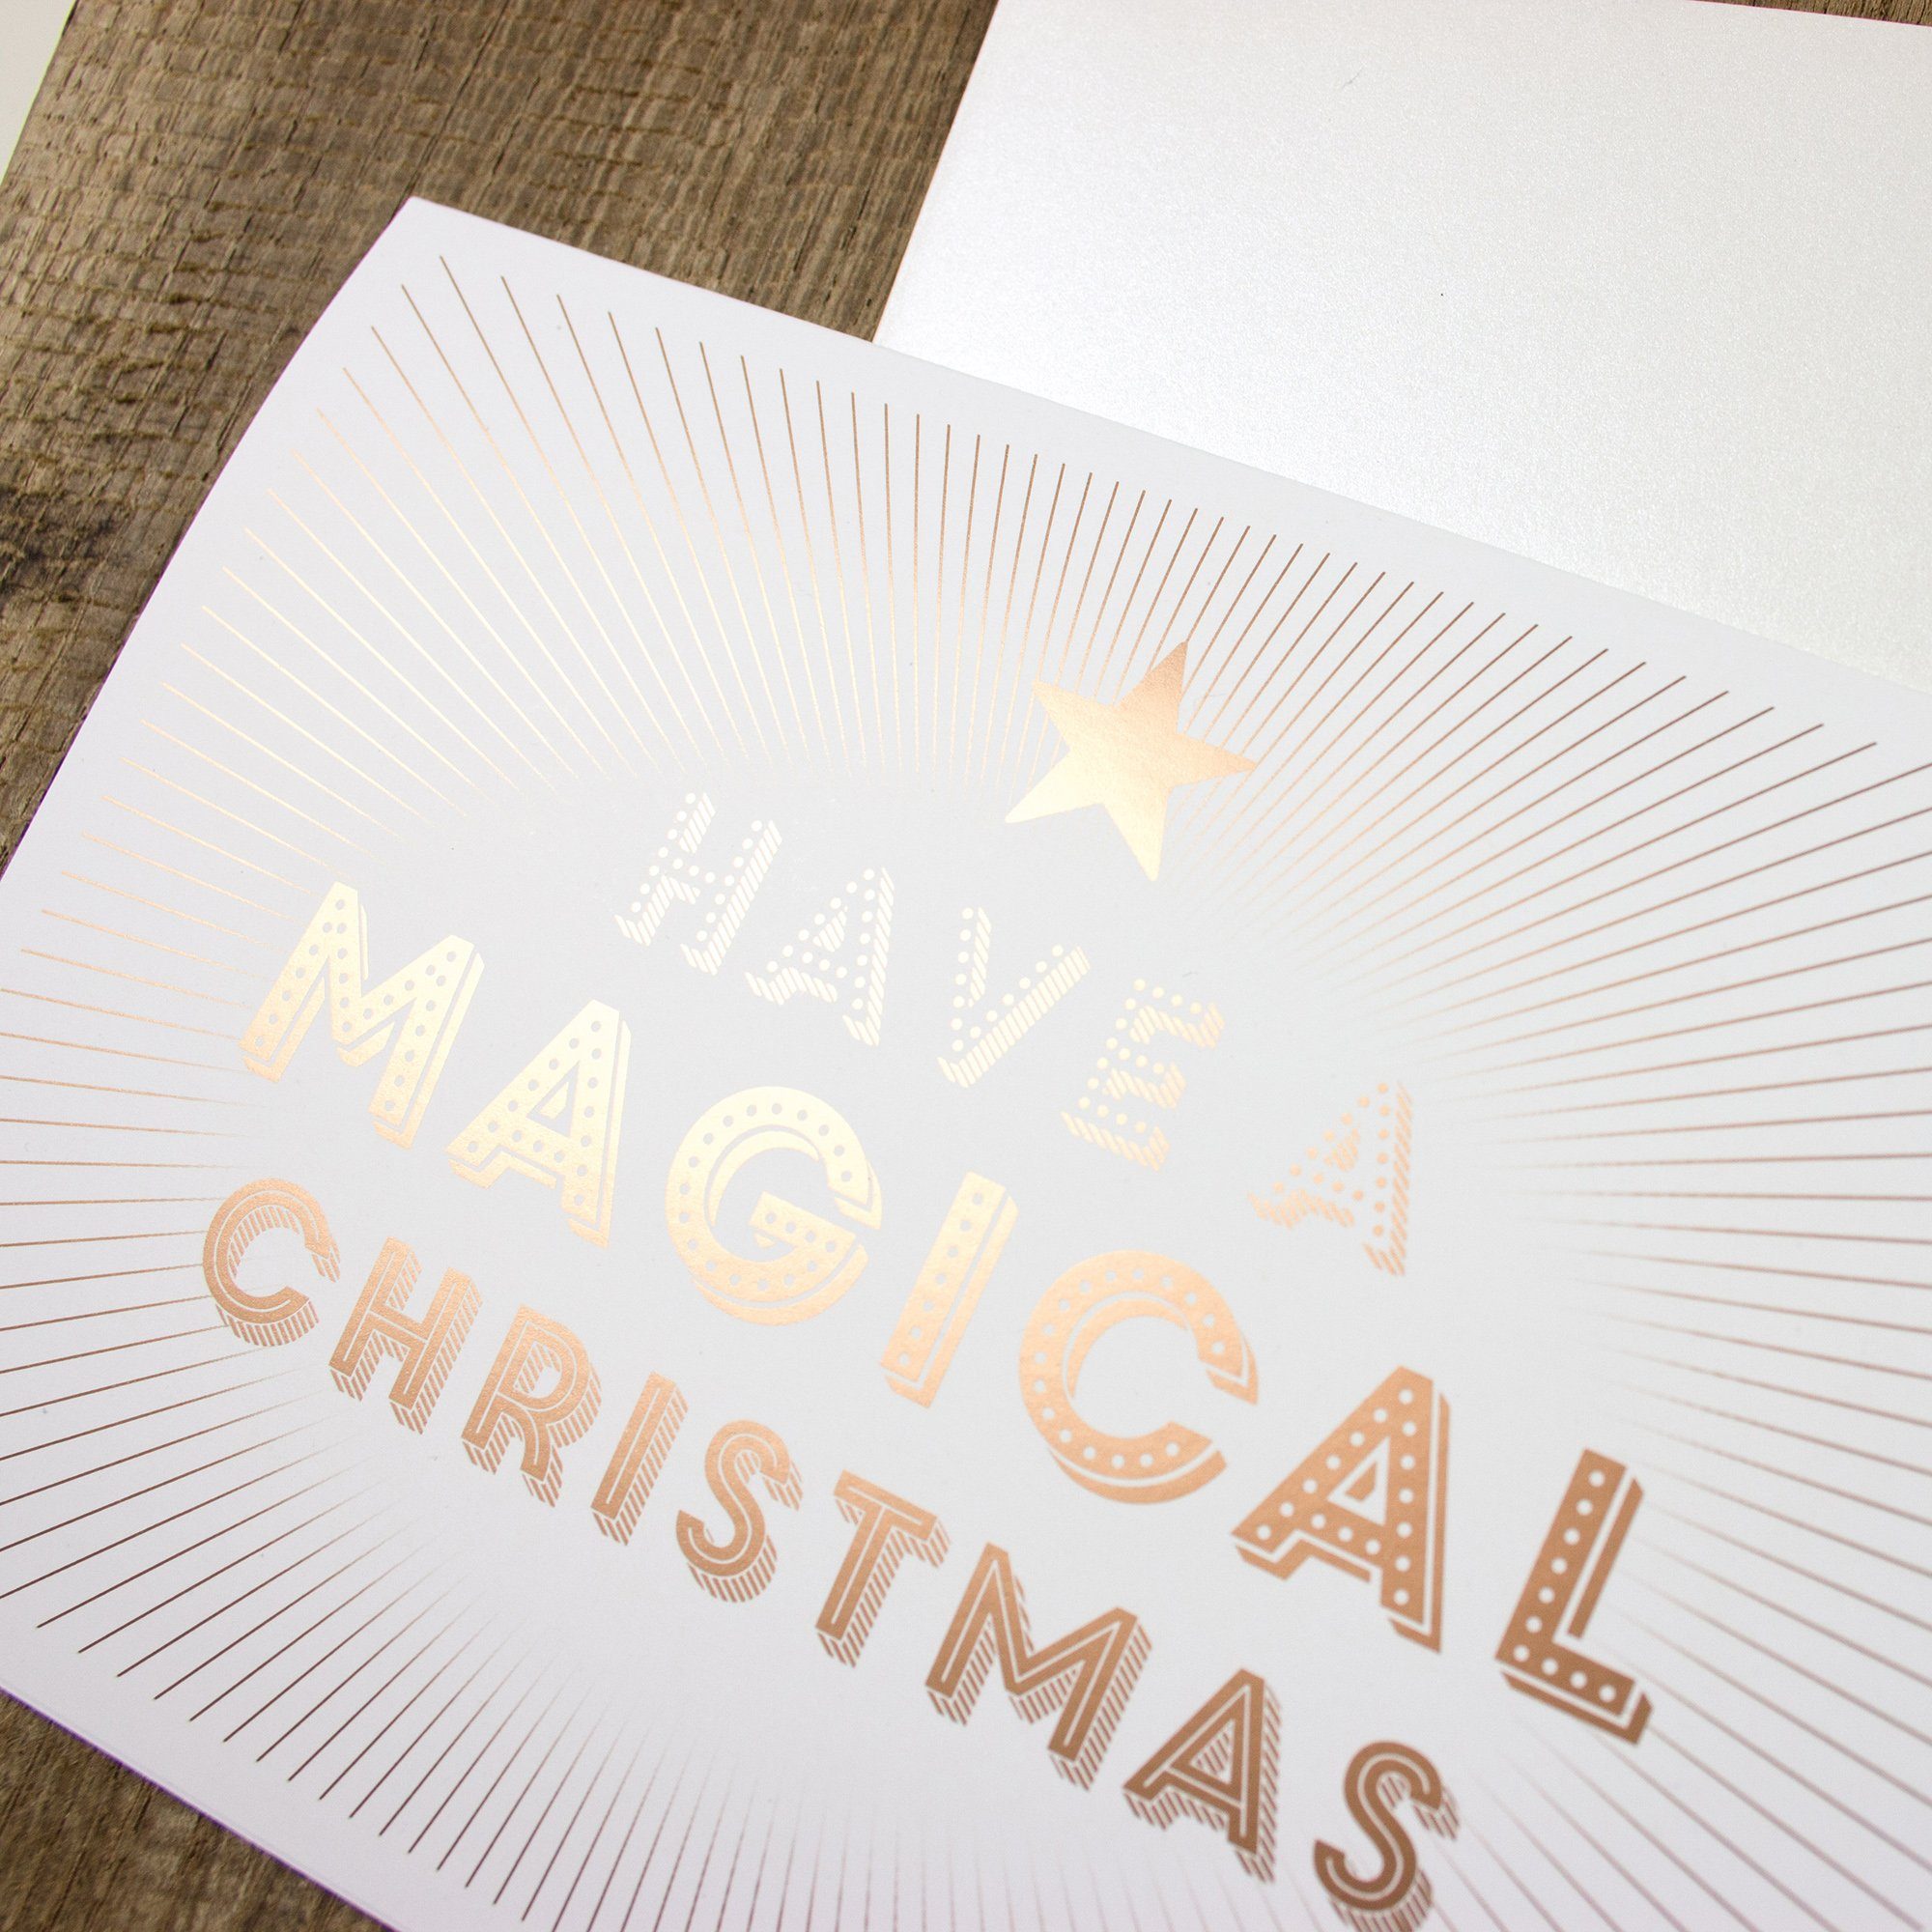 Bow & Hummingbird Magical in Grußkarten Weiß) Grußkarte Christmas (Umschlag